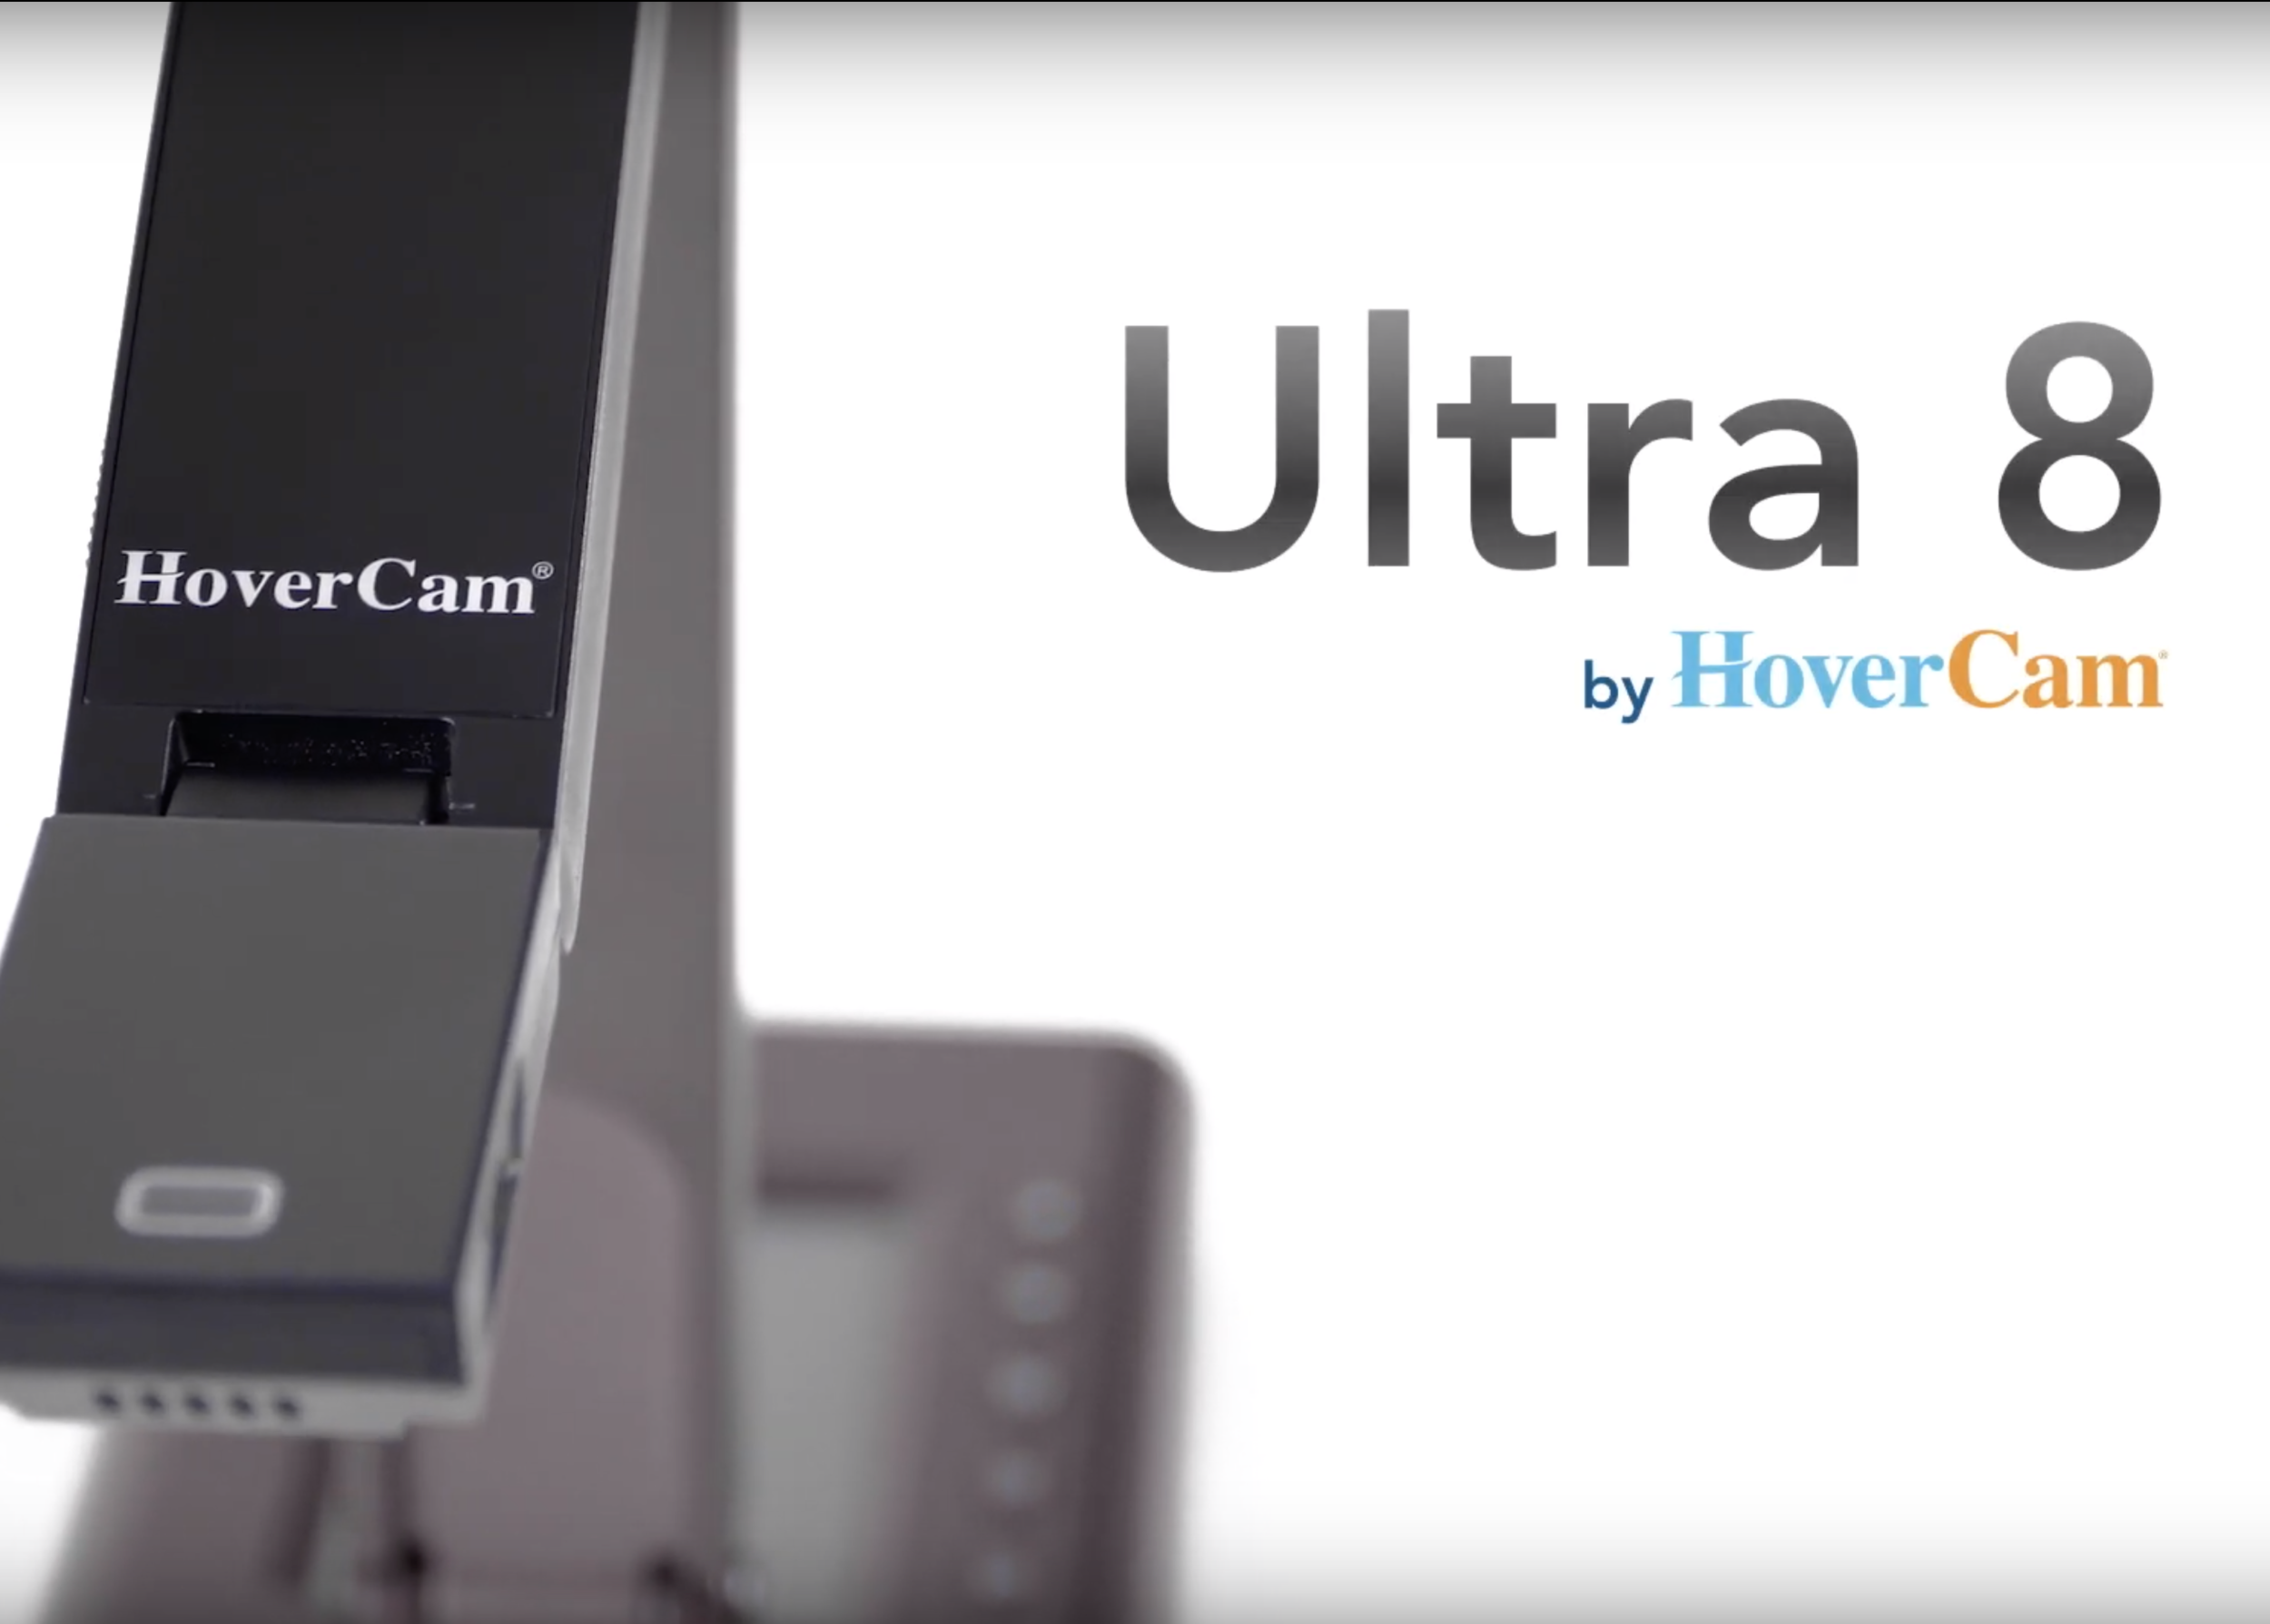 Ultra 8 — HoverCam